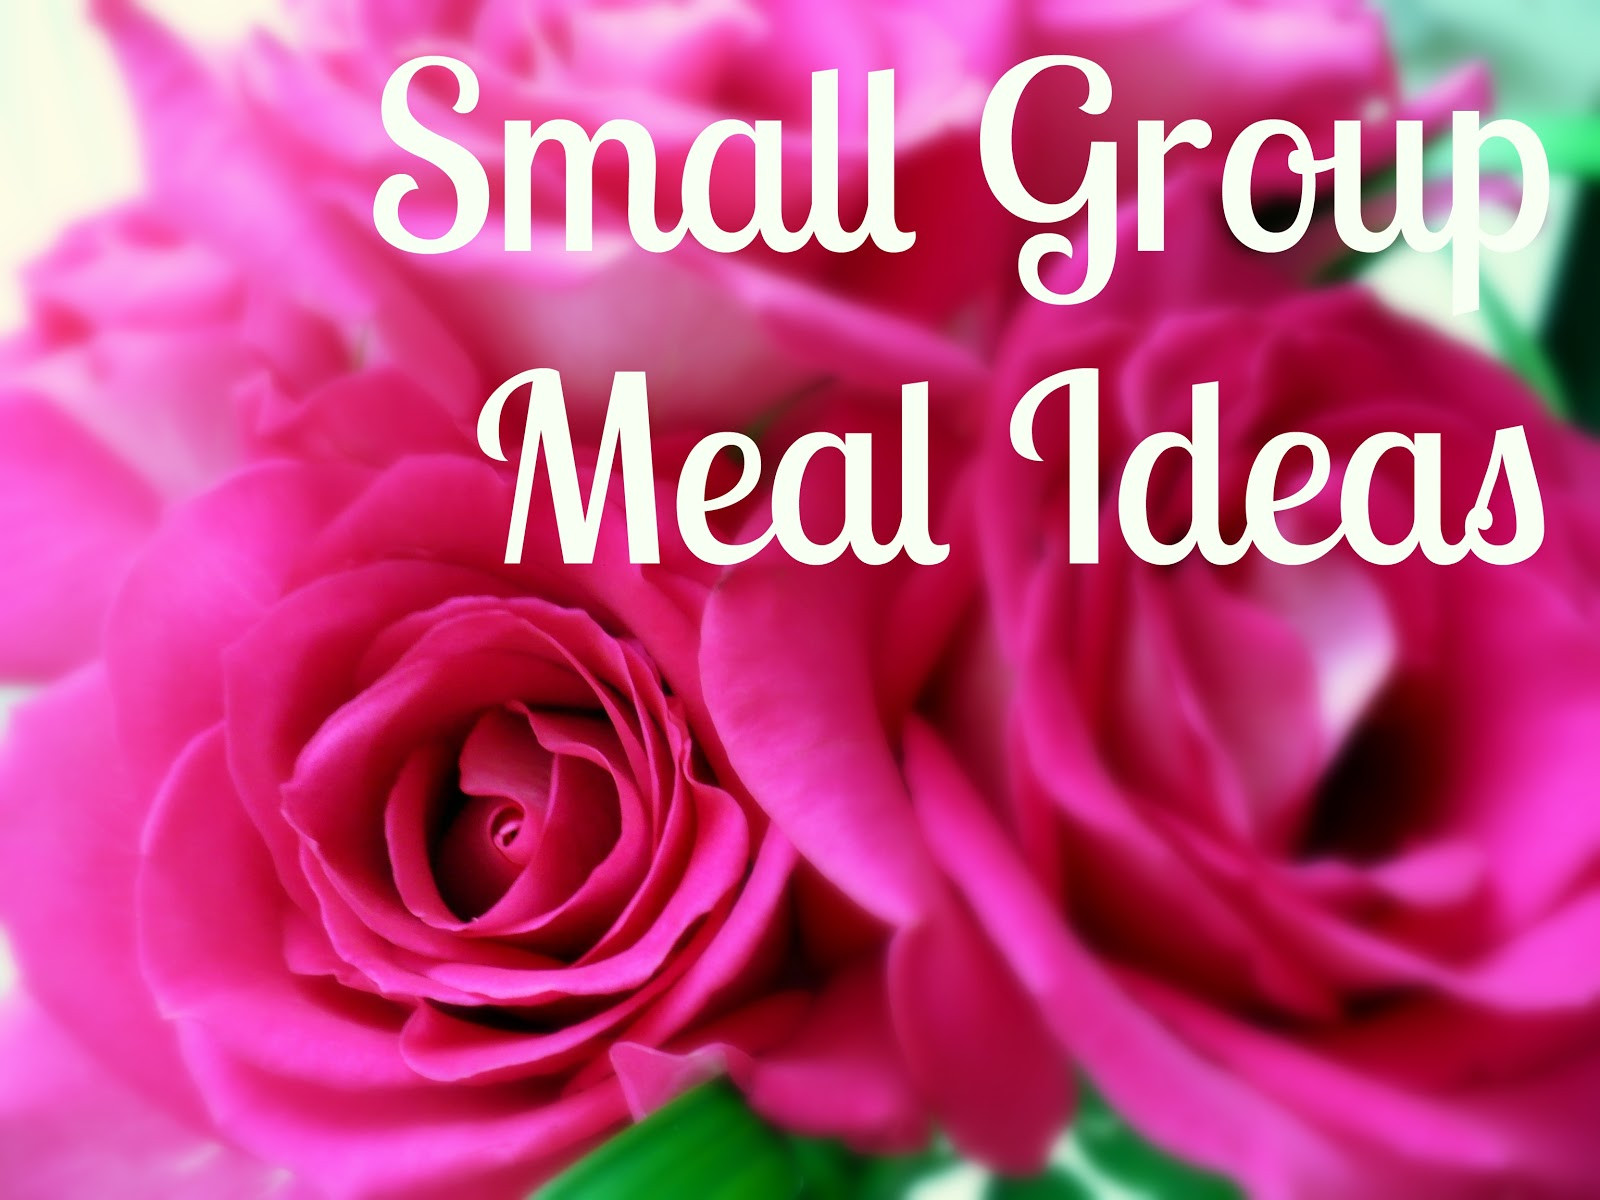 Small Dinner Ideas
 Small Group Meal Ideas